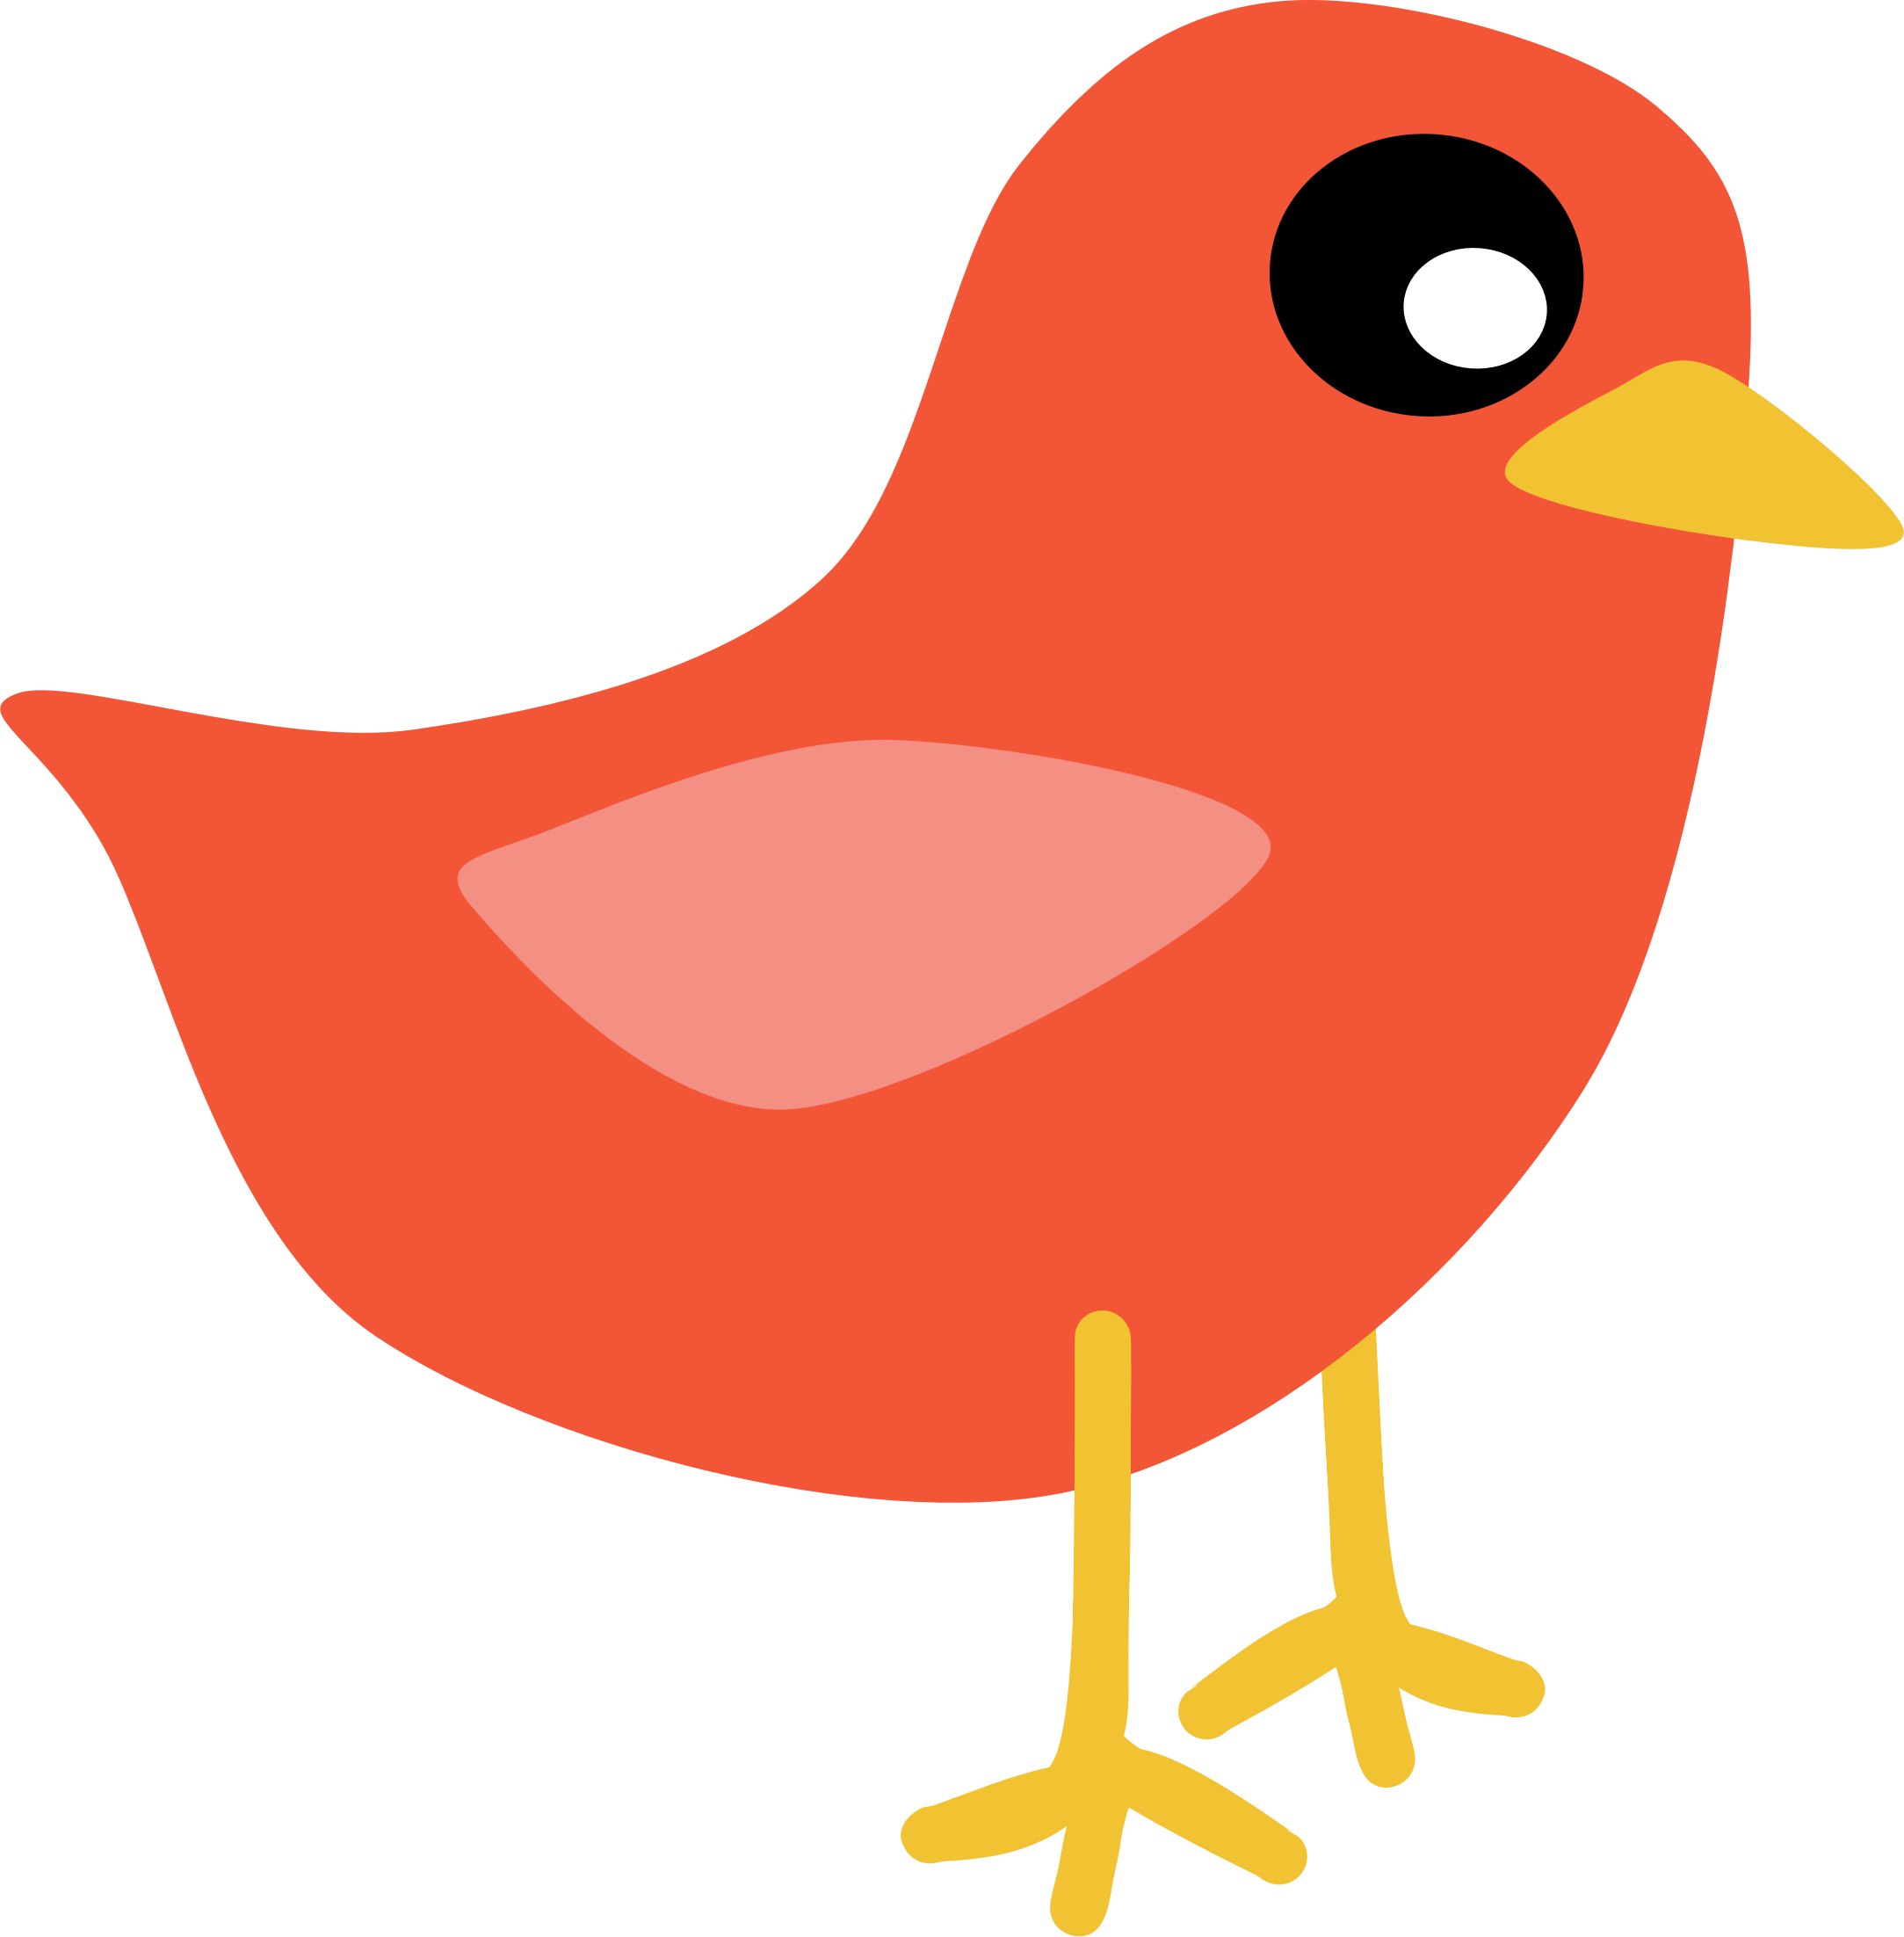 Red Bird By Scout - Red Bird Clip Art